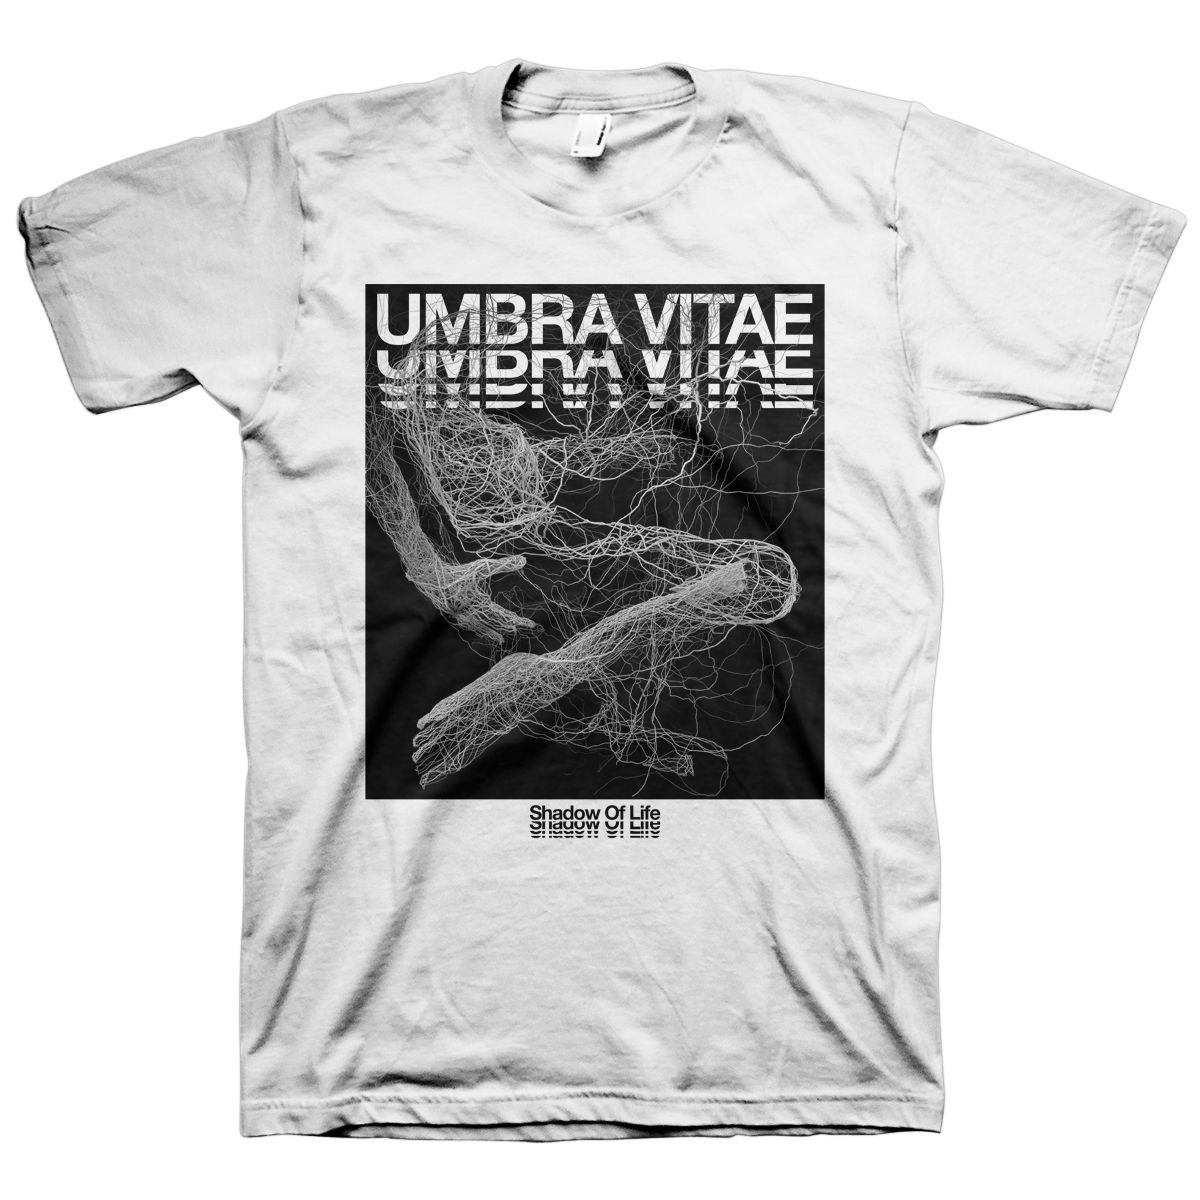 Umbra Vitae "Shadow of Life: Body" White T-Shirt